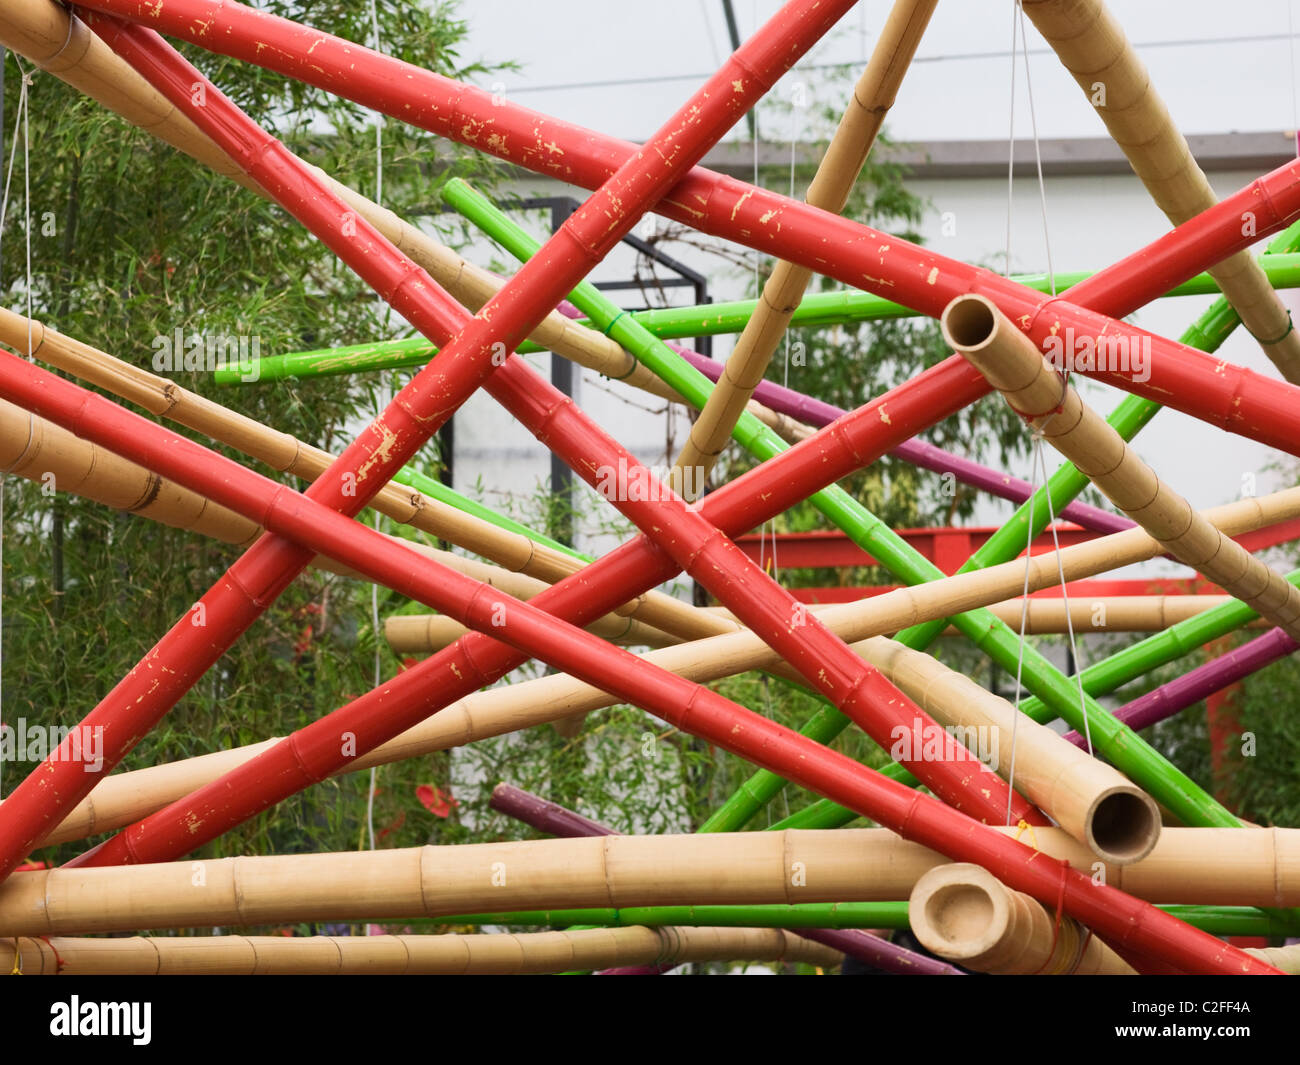 Painted bamboo poles creative arranged Stock Photo - Alamy